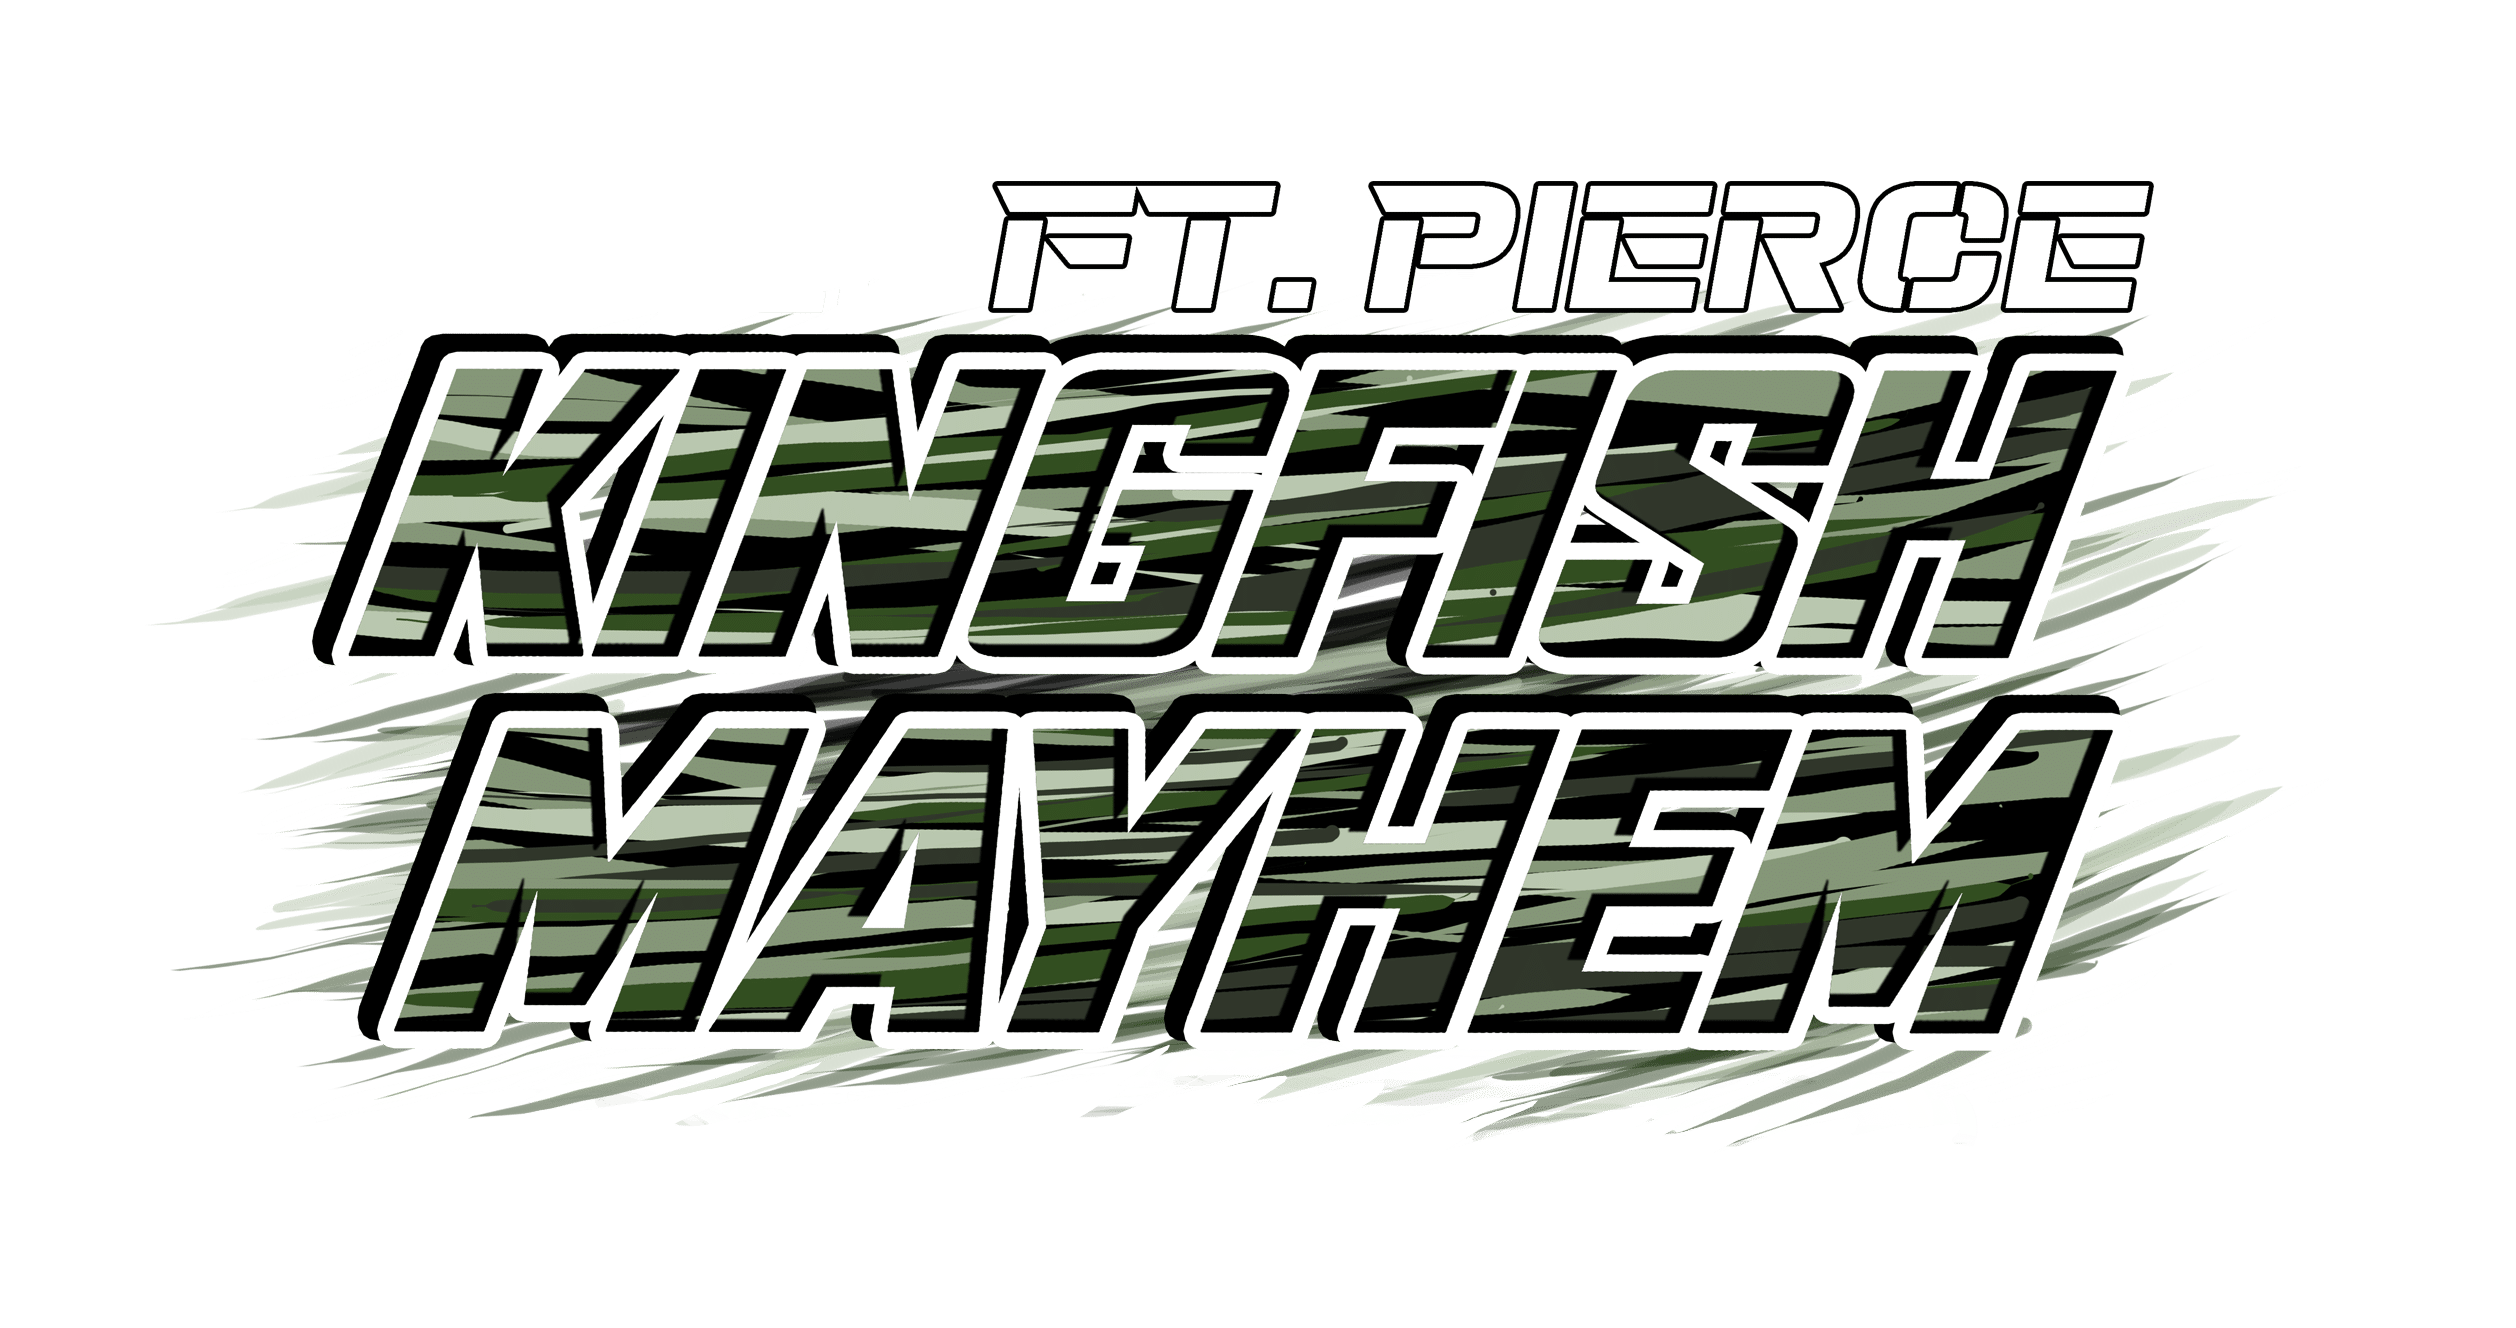 leg two south: fort pierce kingfish mayhem